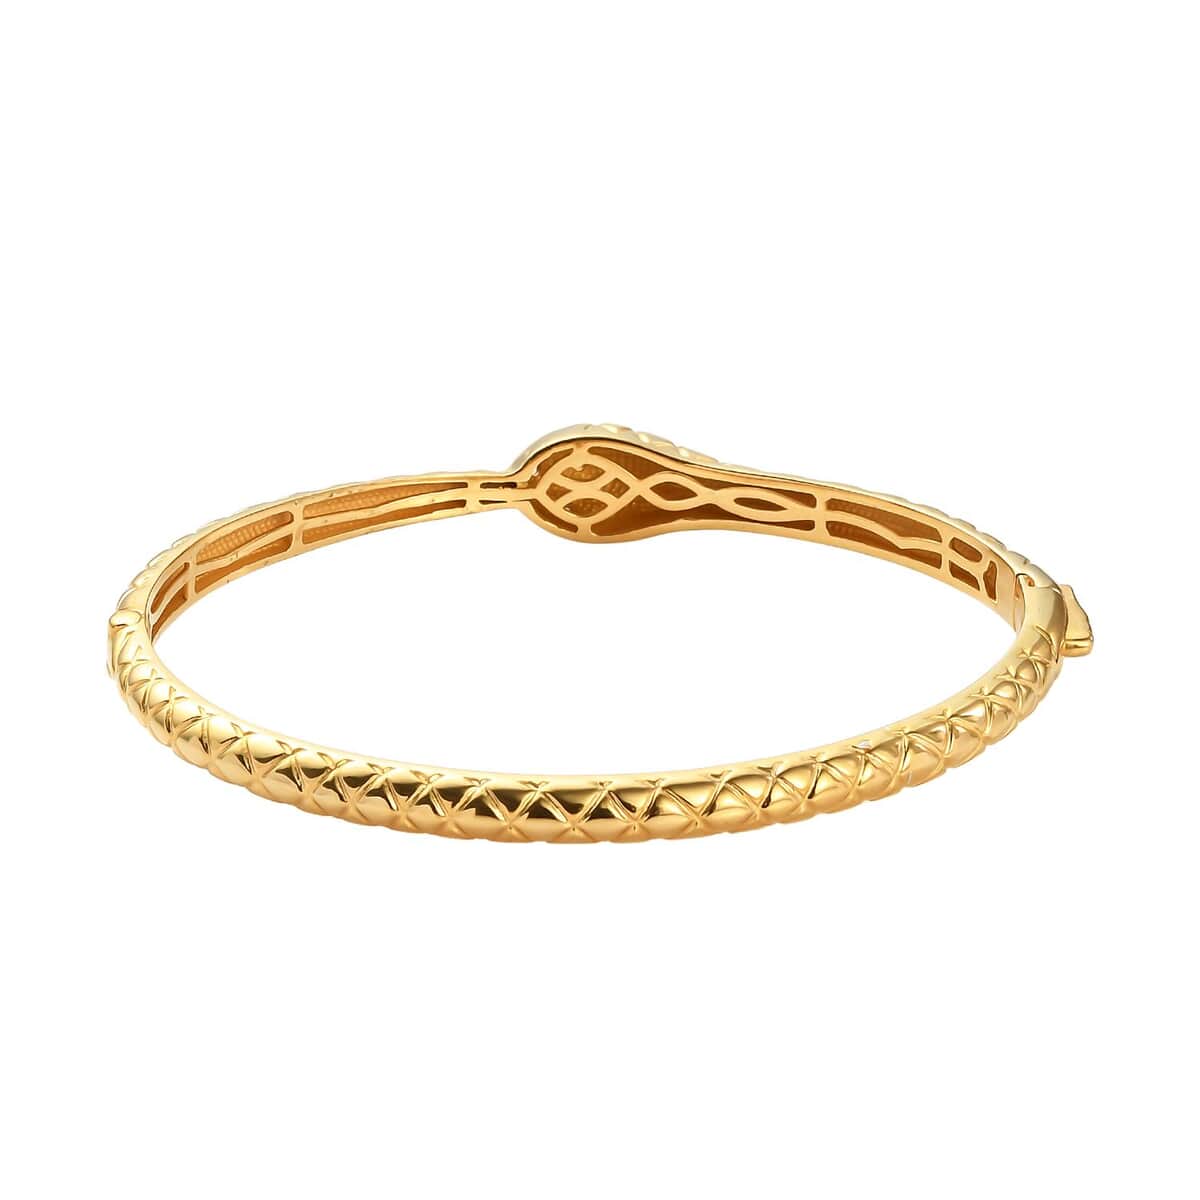 KARIS Natural White Zircon Eternal Love Snake Bangle Bracelet in 18K YG Plated (Size 7.25 In) 0.15 ctw image number 4